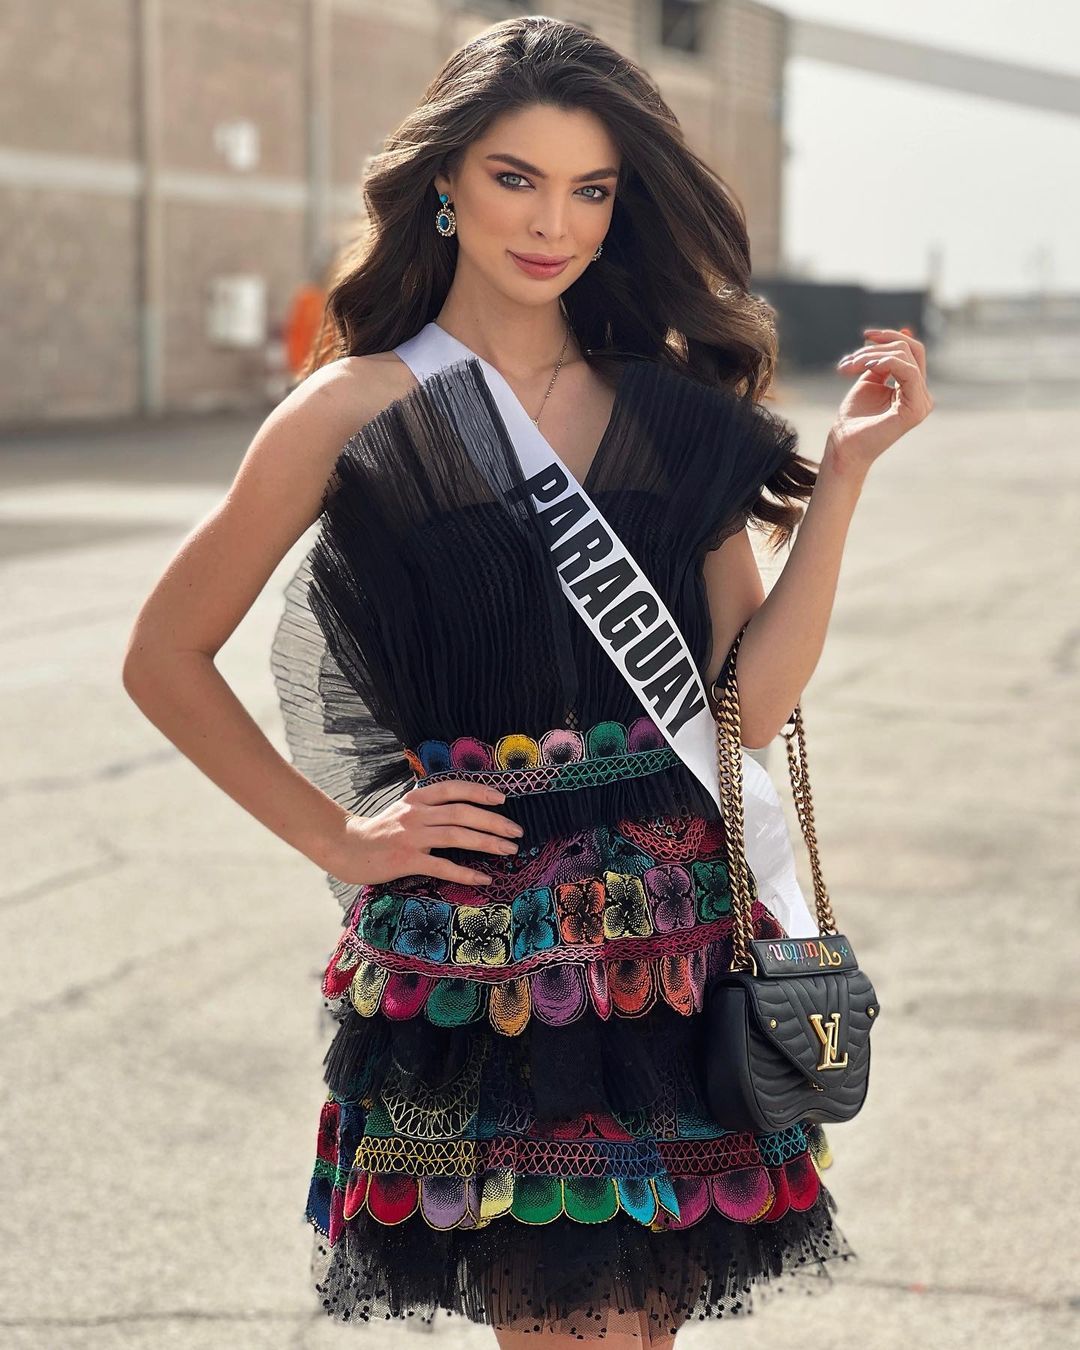 Nadia Ferreira, Miss Universo Paraguay. Foto: Instagram.